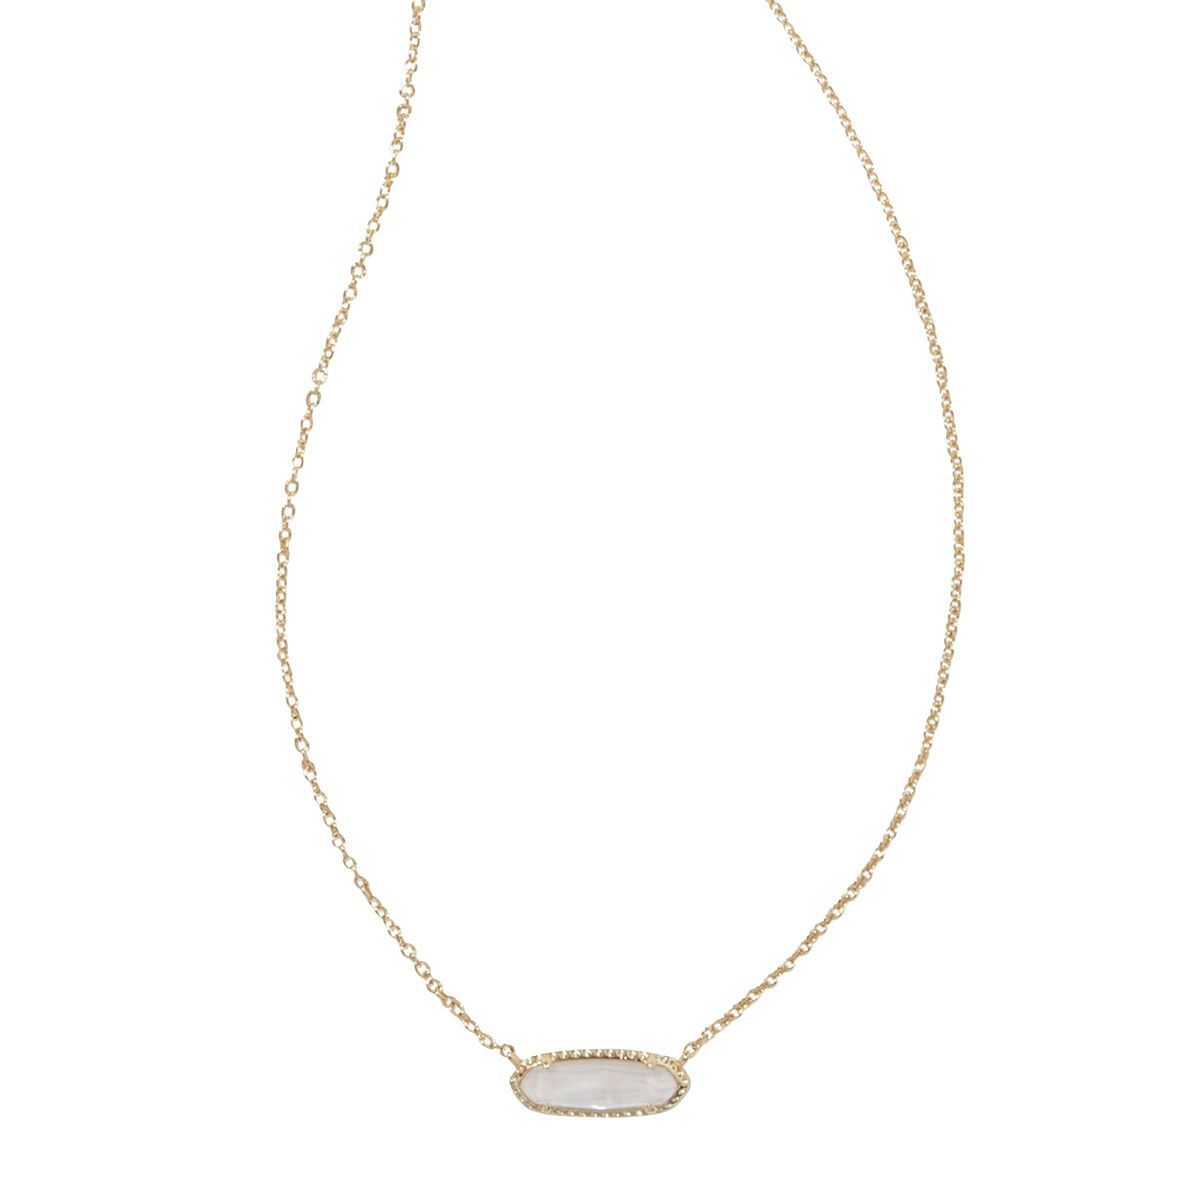 Kendra Scott Eva 14K Gold Over Brass Pendant Necklace - Mother of Pearl | Target